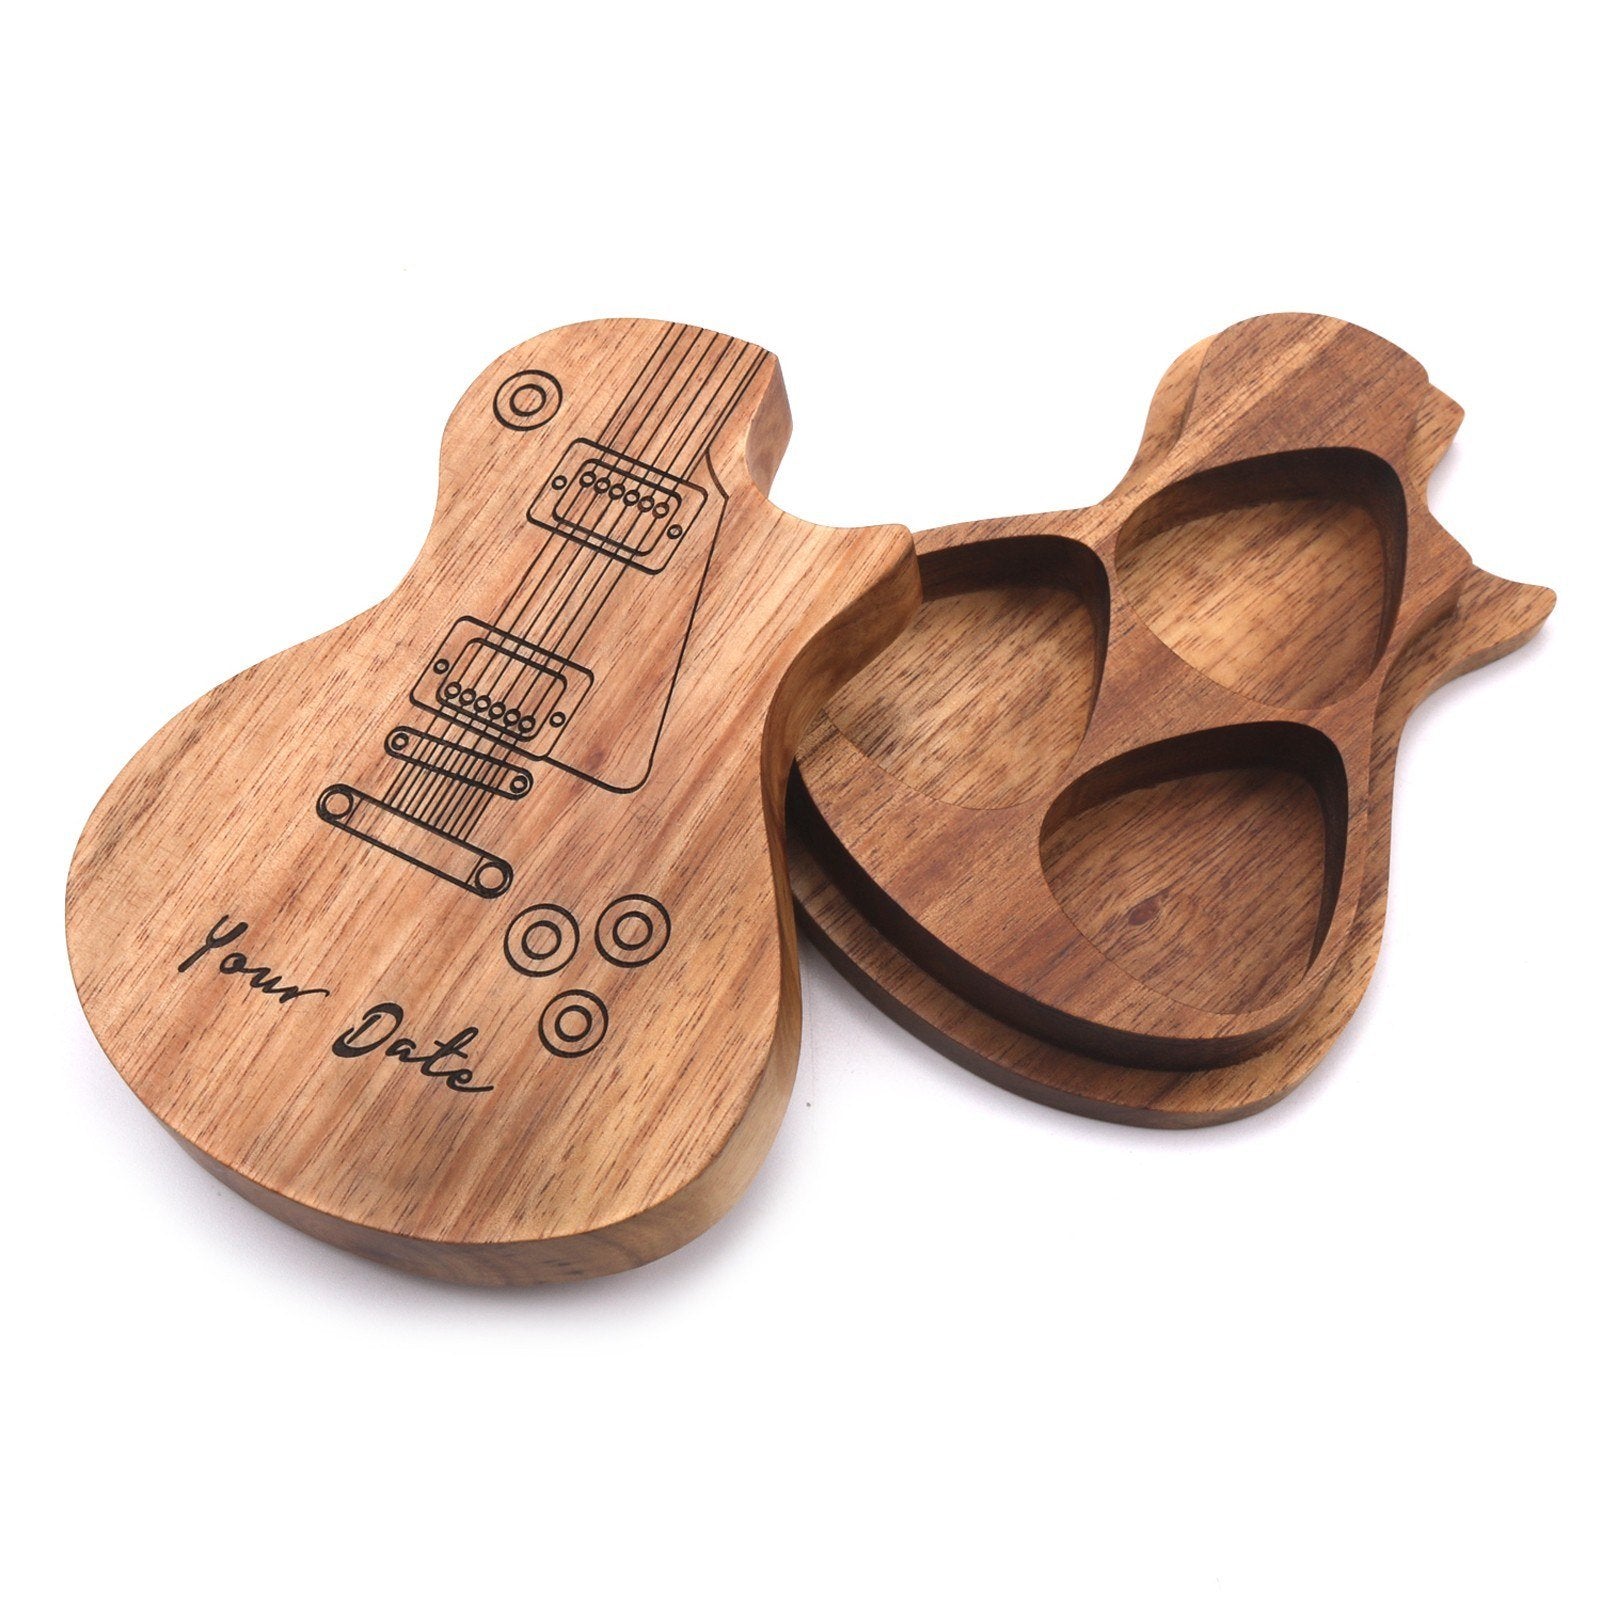 3 Pcs Wooden Guitar Picks with Box Wood